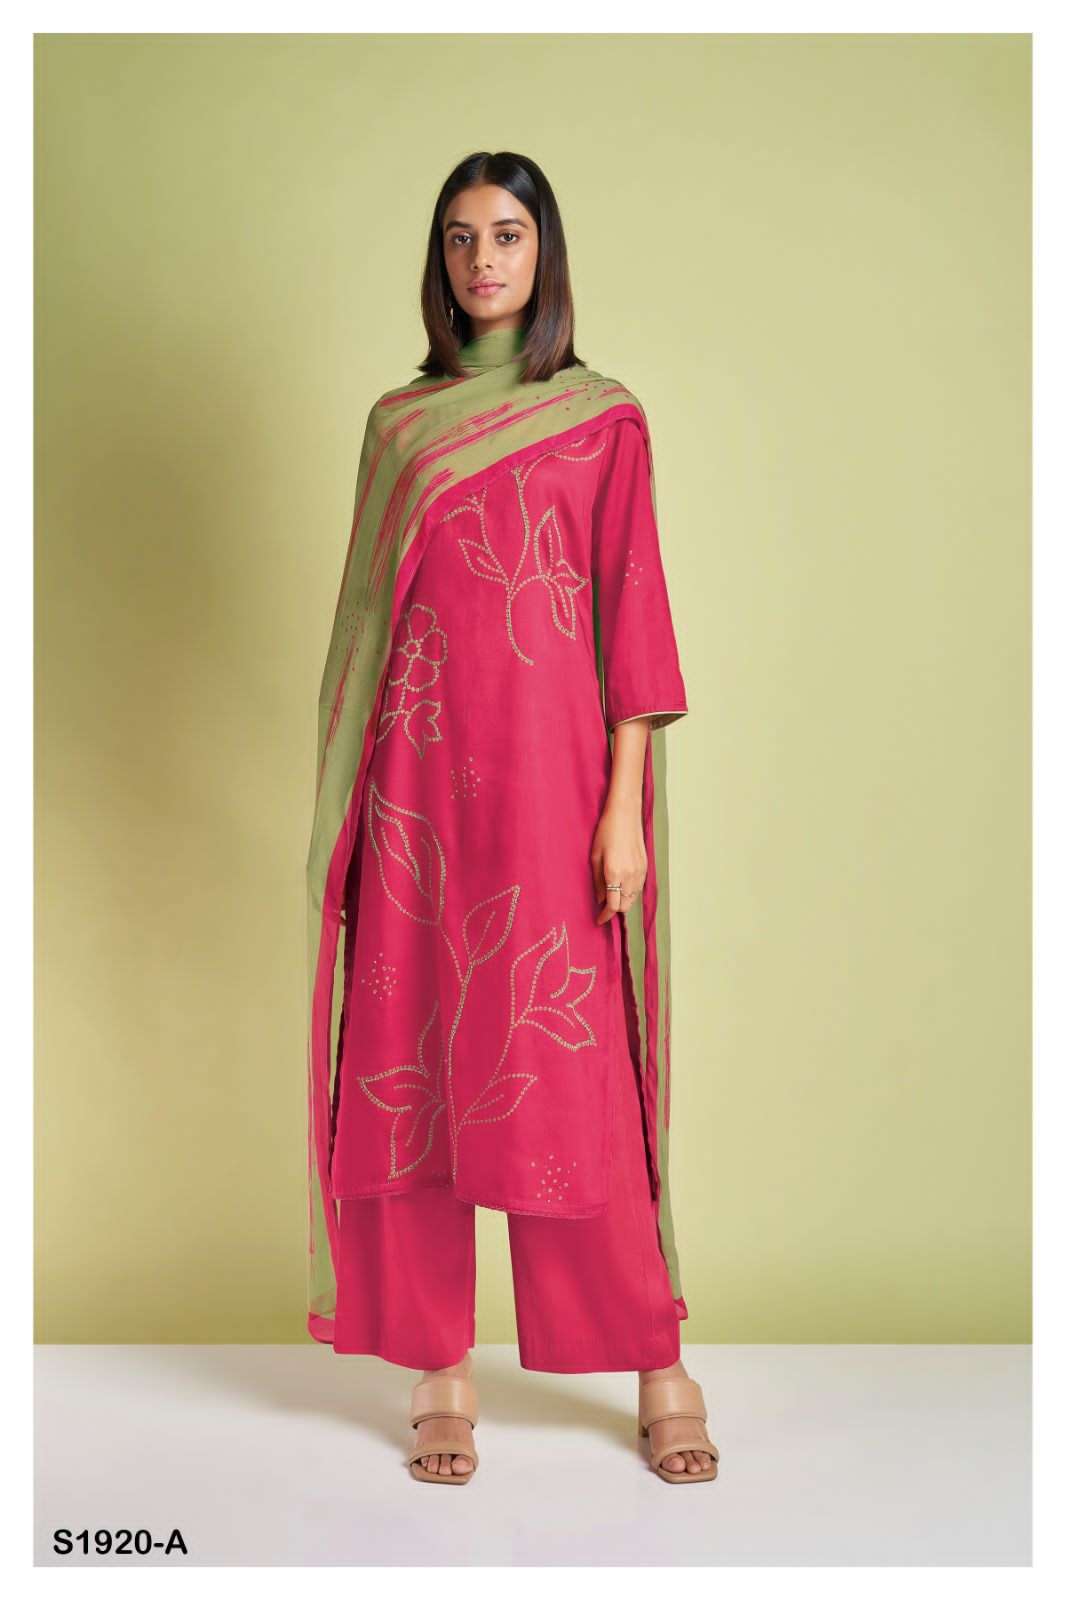 ganga lillian 1920 colour series designer latest wedding salwar kameez wholesaler surat gujarat